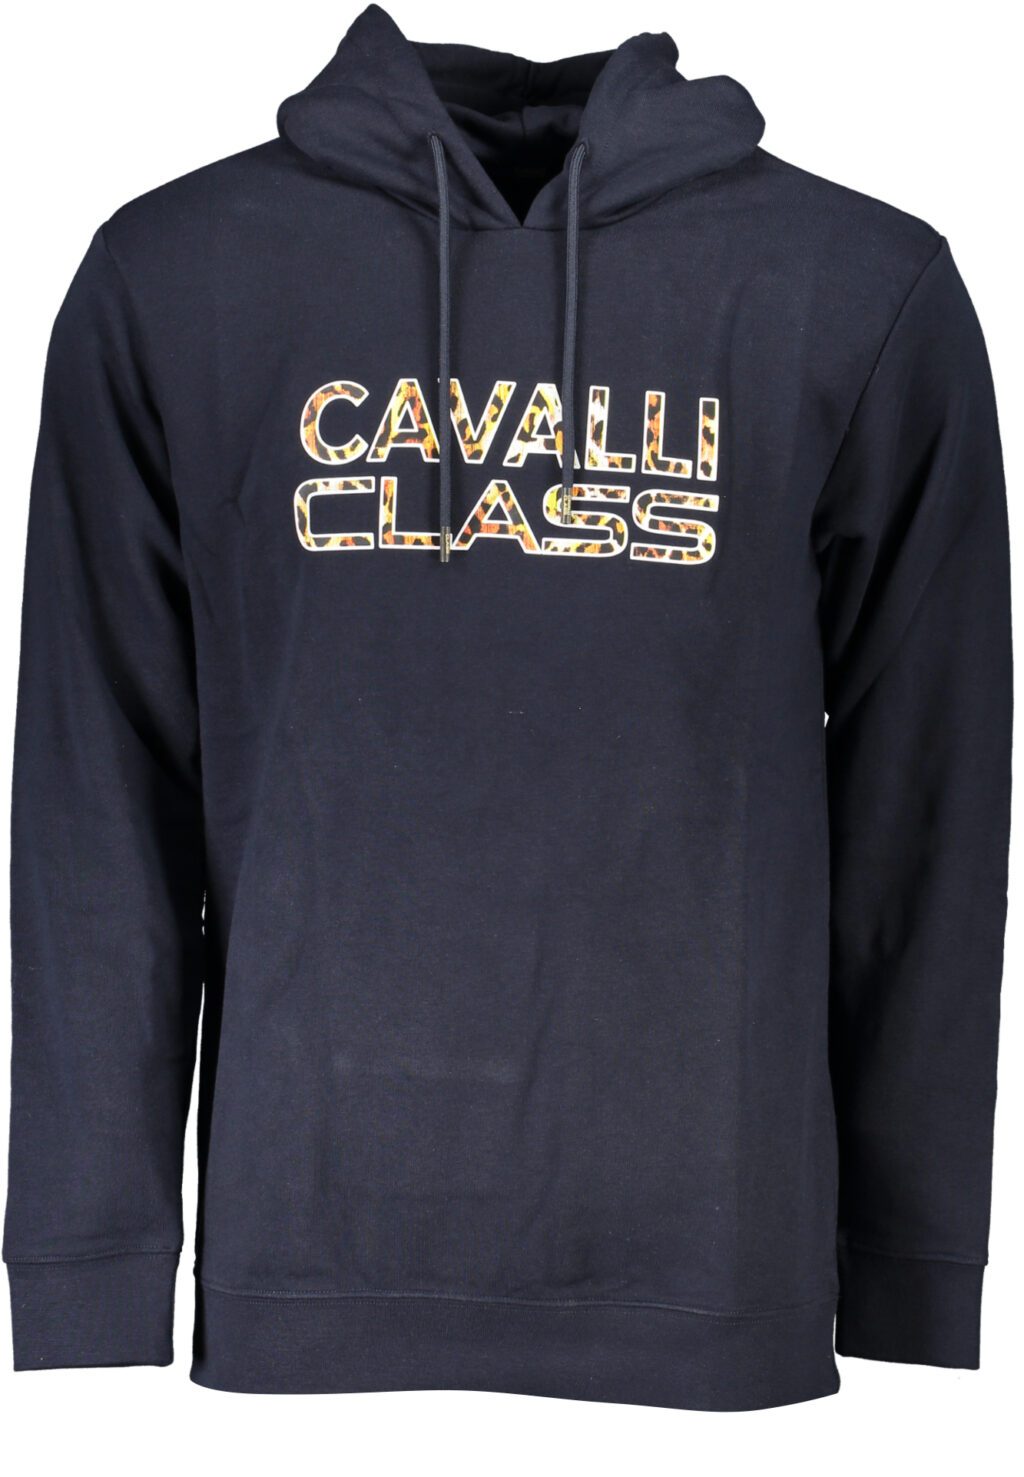 CAVALLI CLASS MEN'S BLUE ZIPLESS SWEATSHIRT RXT65FCF062_BL04926